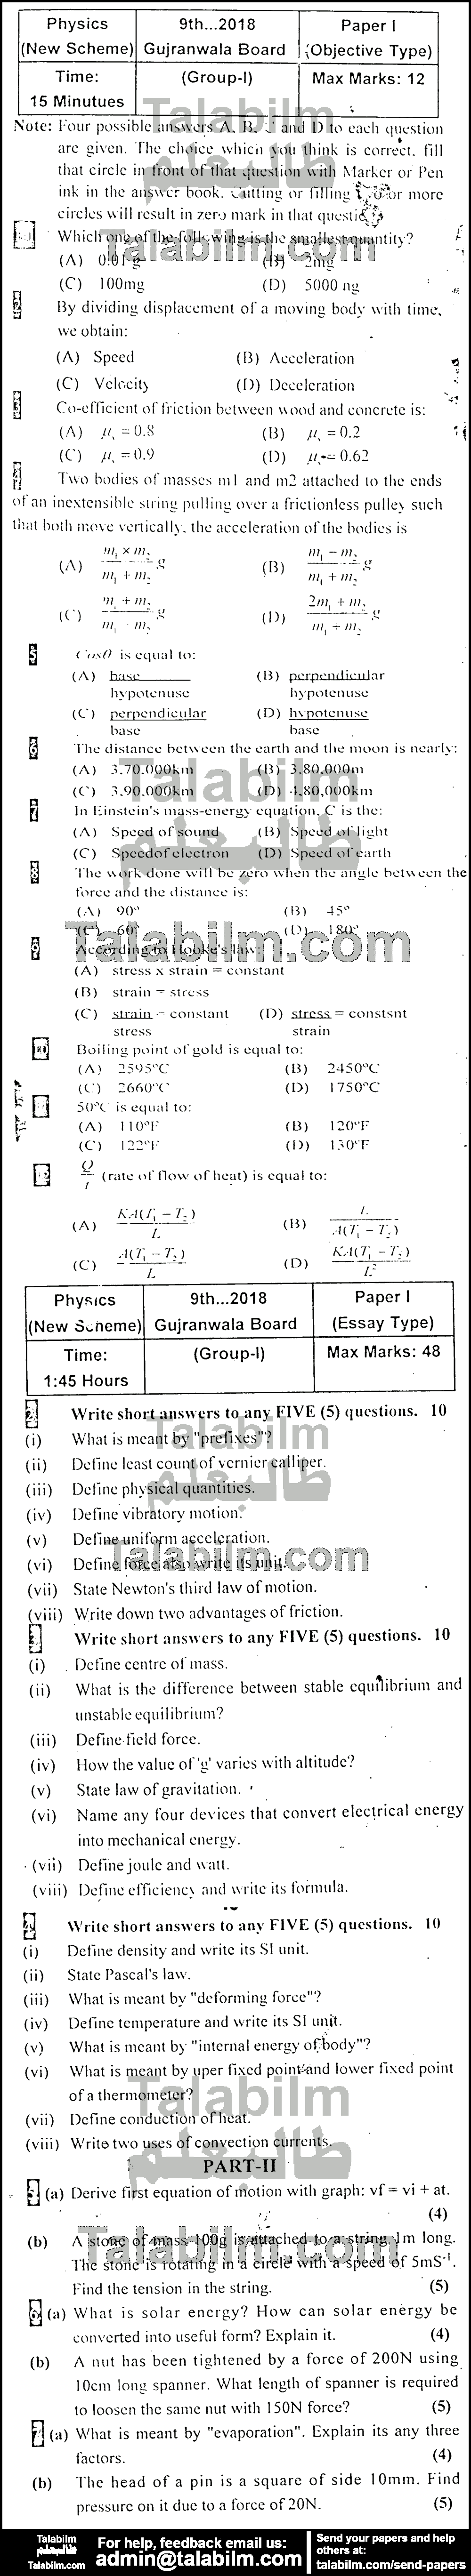 Physics 0 past paper for English Medium 2018 Group-I